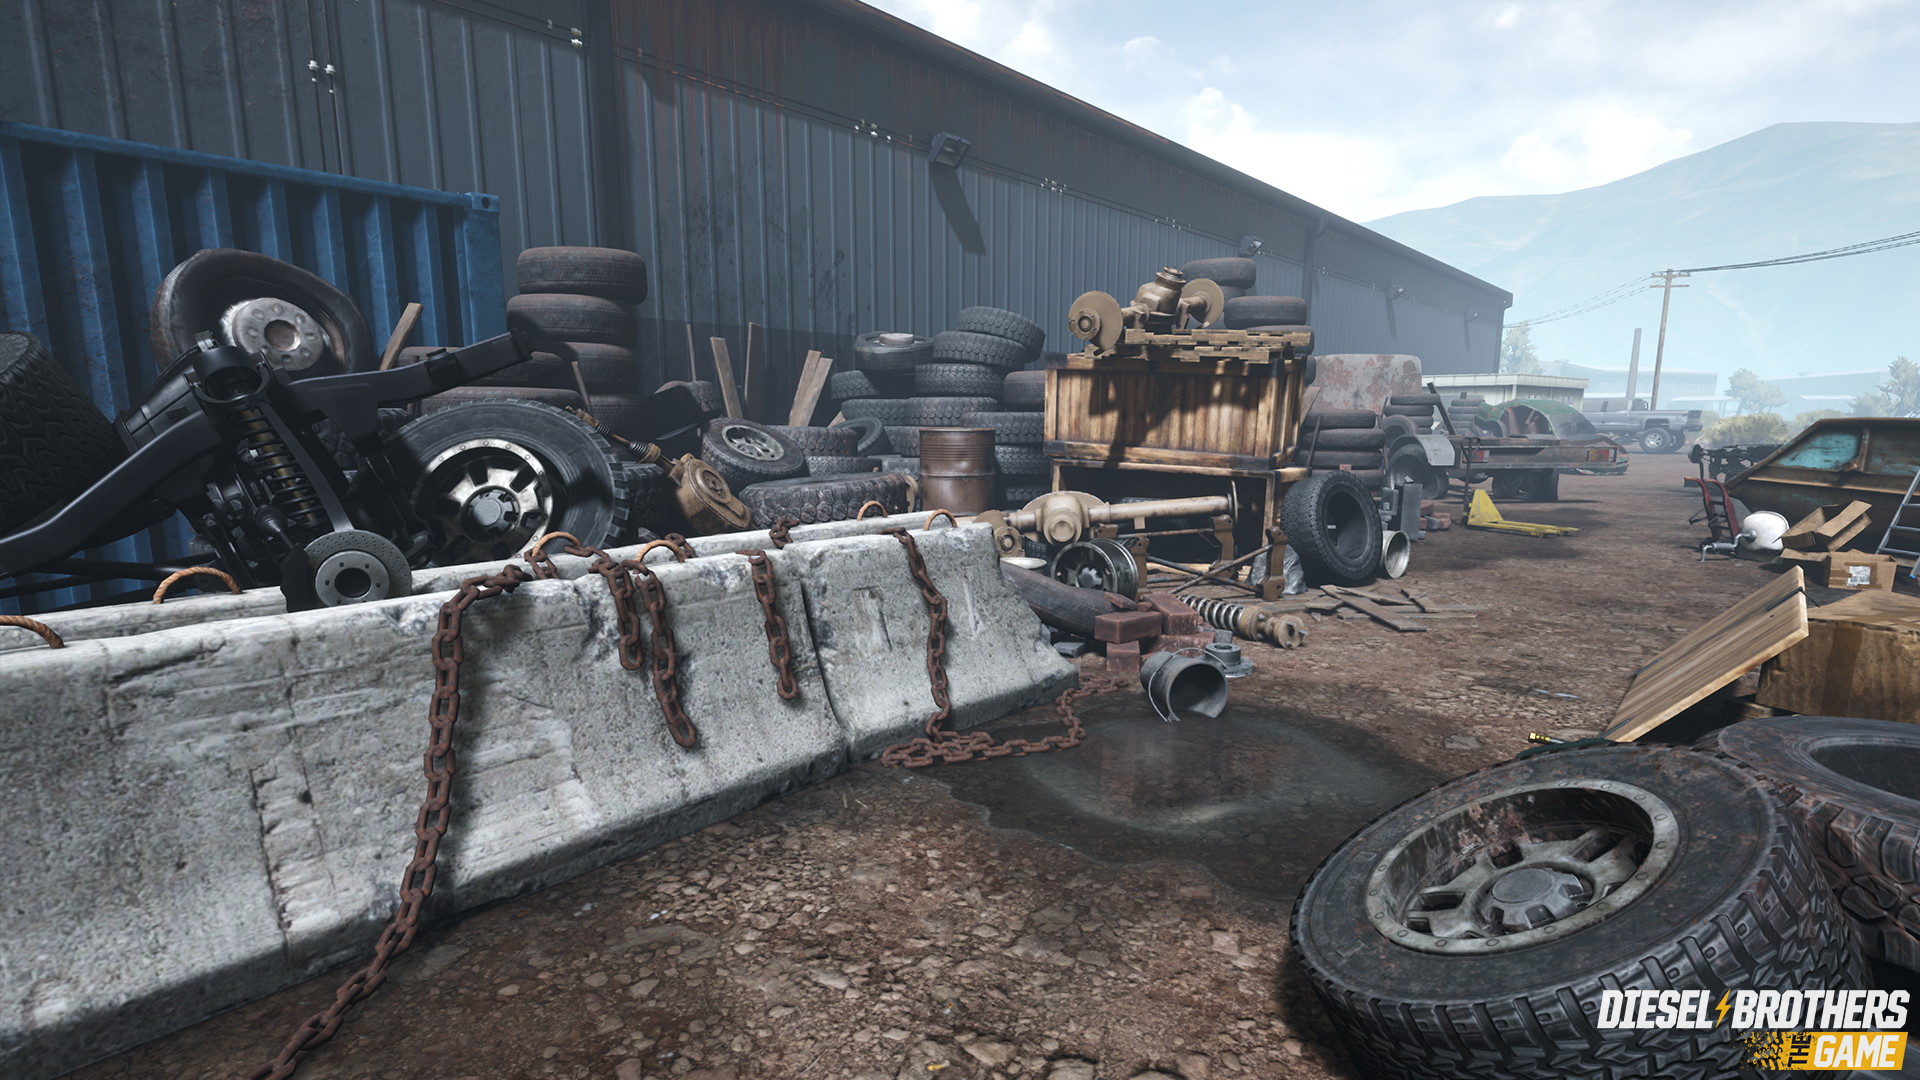 Diesel Brothers: Truck Building Simulator - screenshot 2